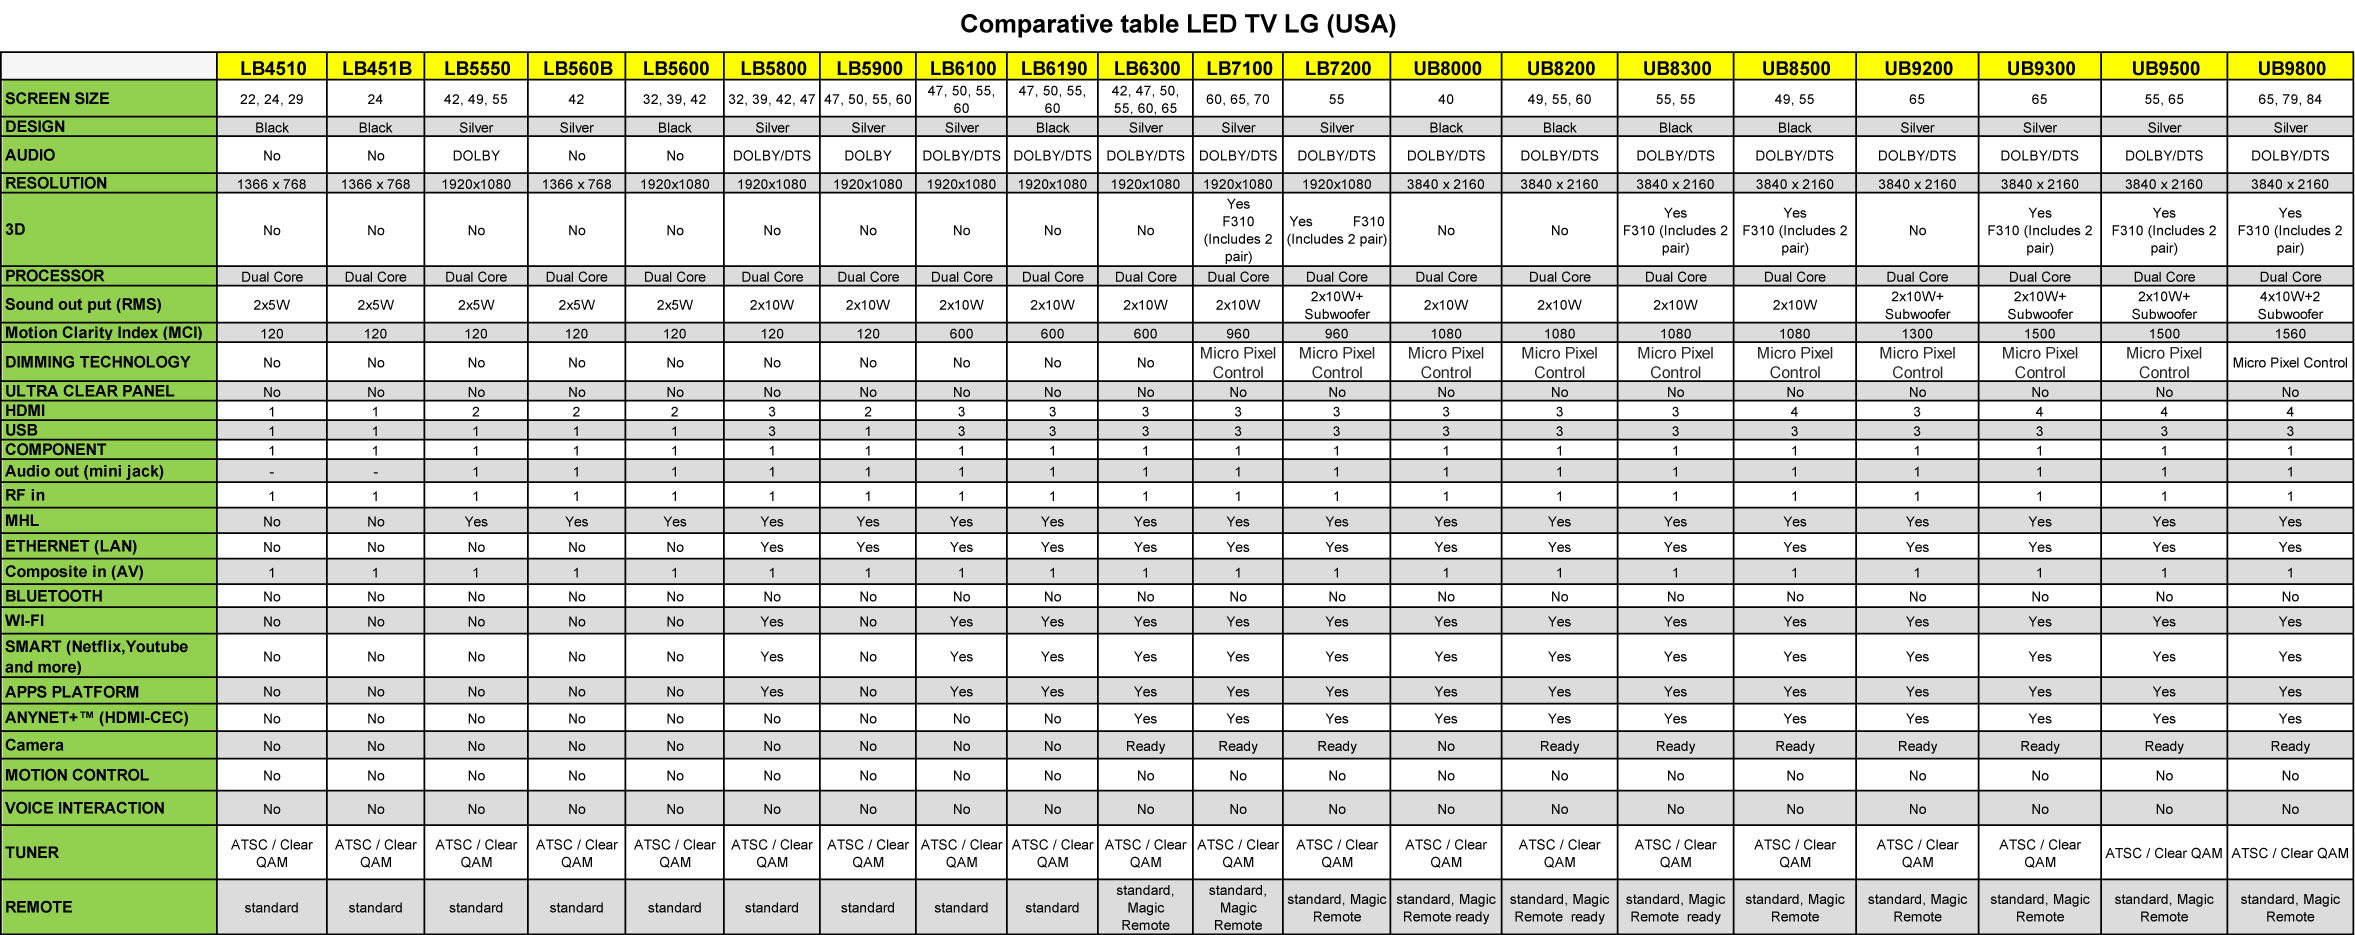 Телевизоры характеристики описание. Таблица сравнения телевизоров TCL. Модельный ряд телевизоров LG 2022 года PMI. Характеристики телевизоров. Линейка моделей телевизоров LG.